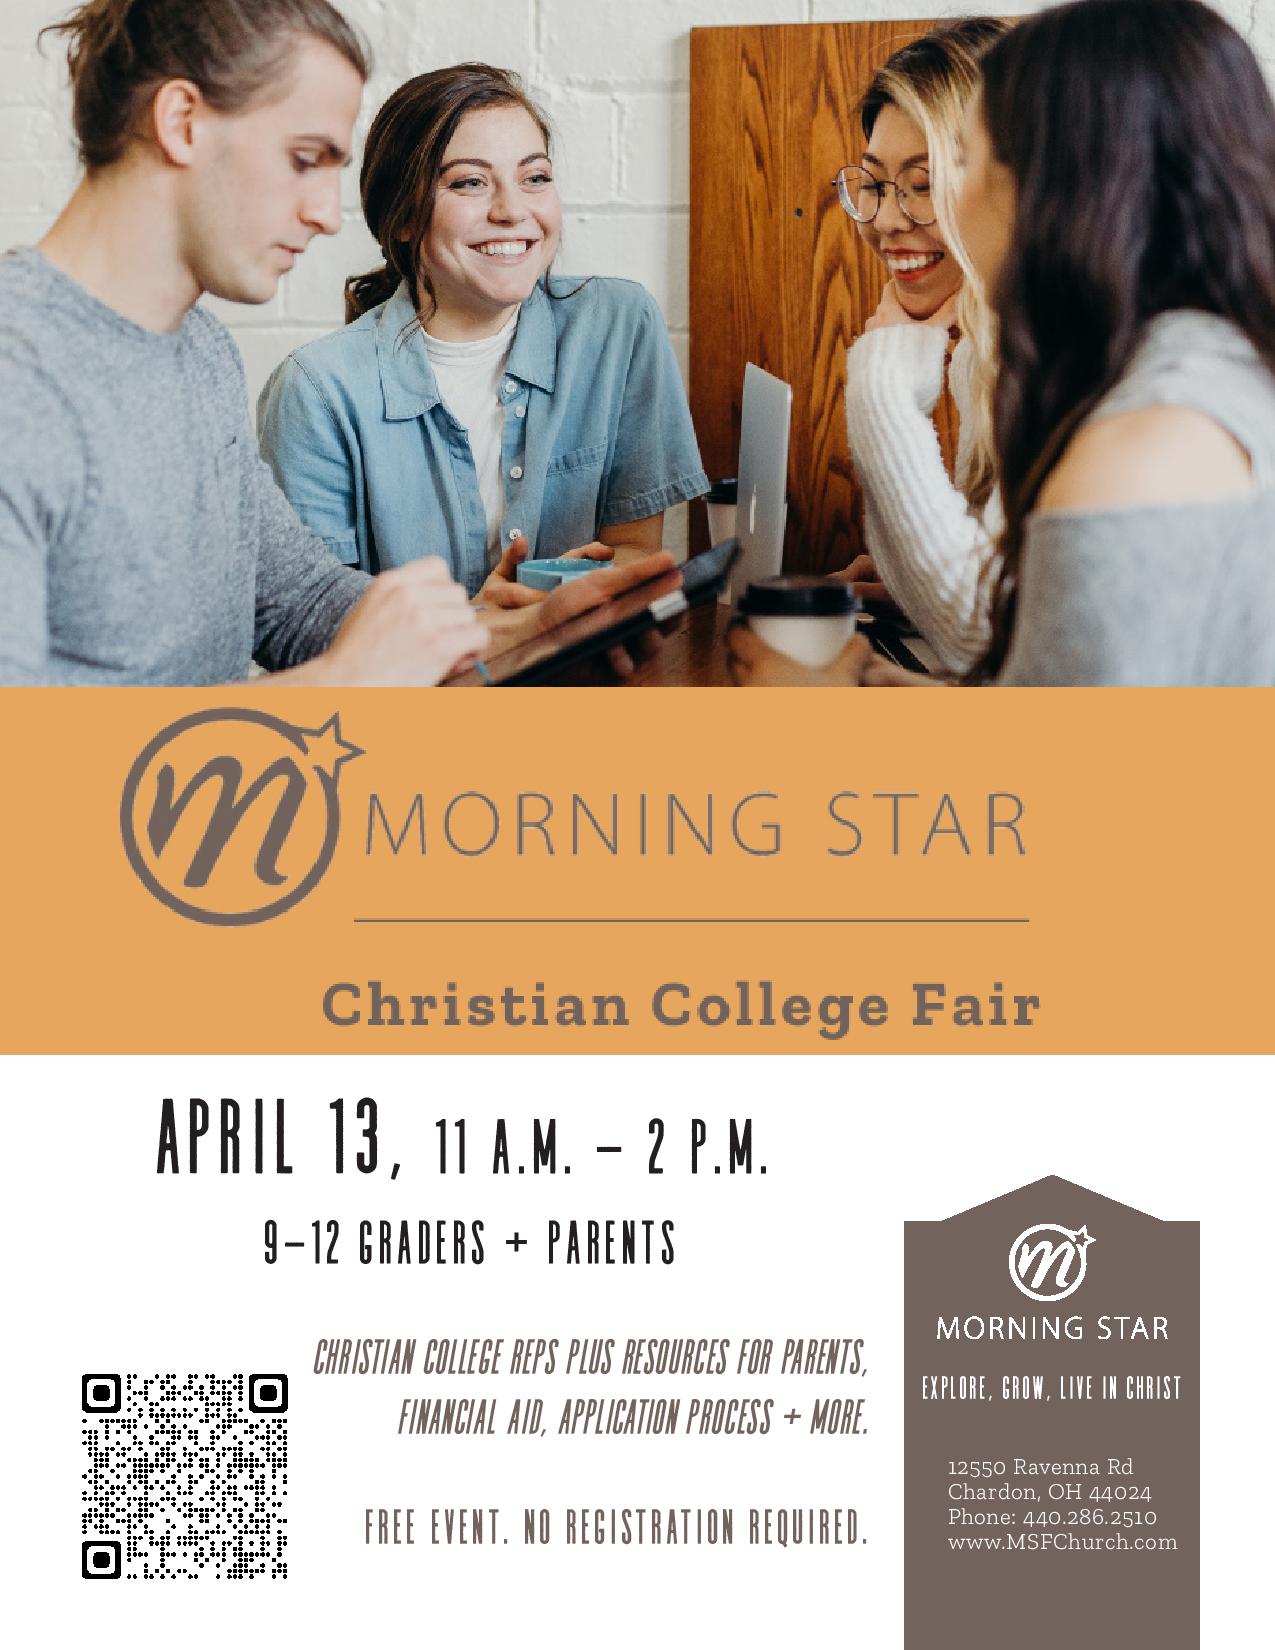 Morning Star Christian College Fair 